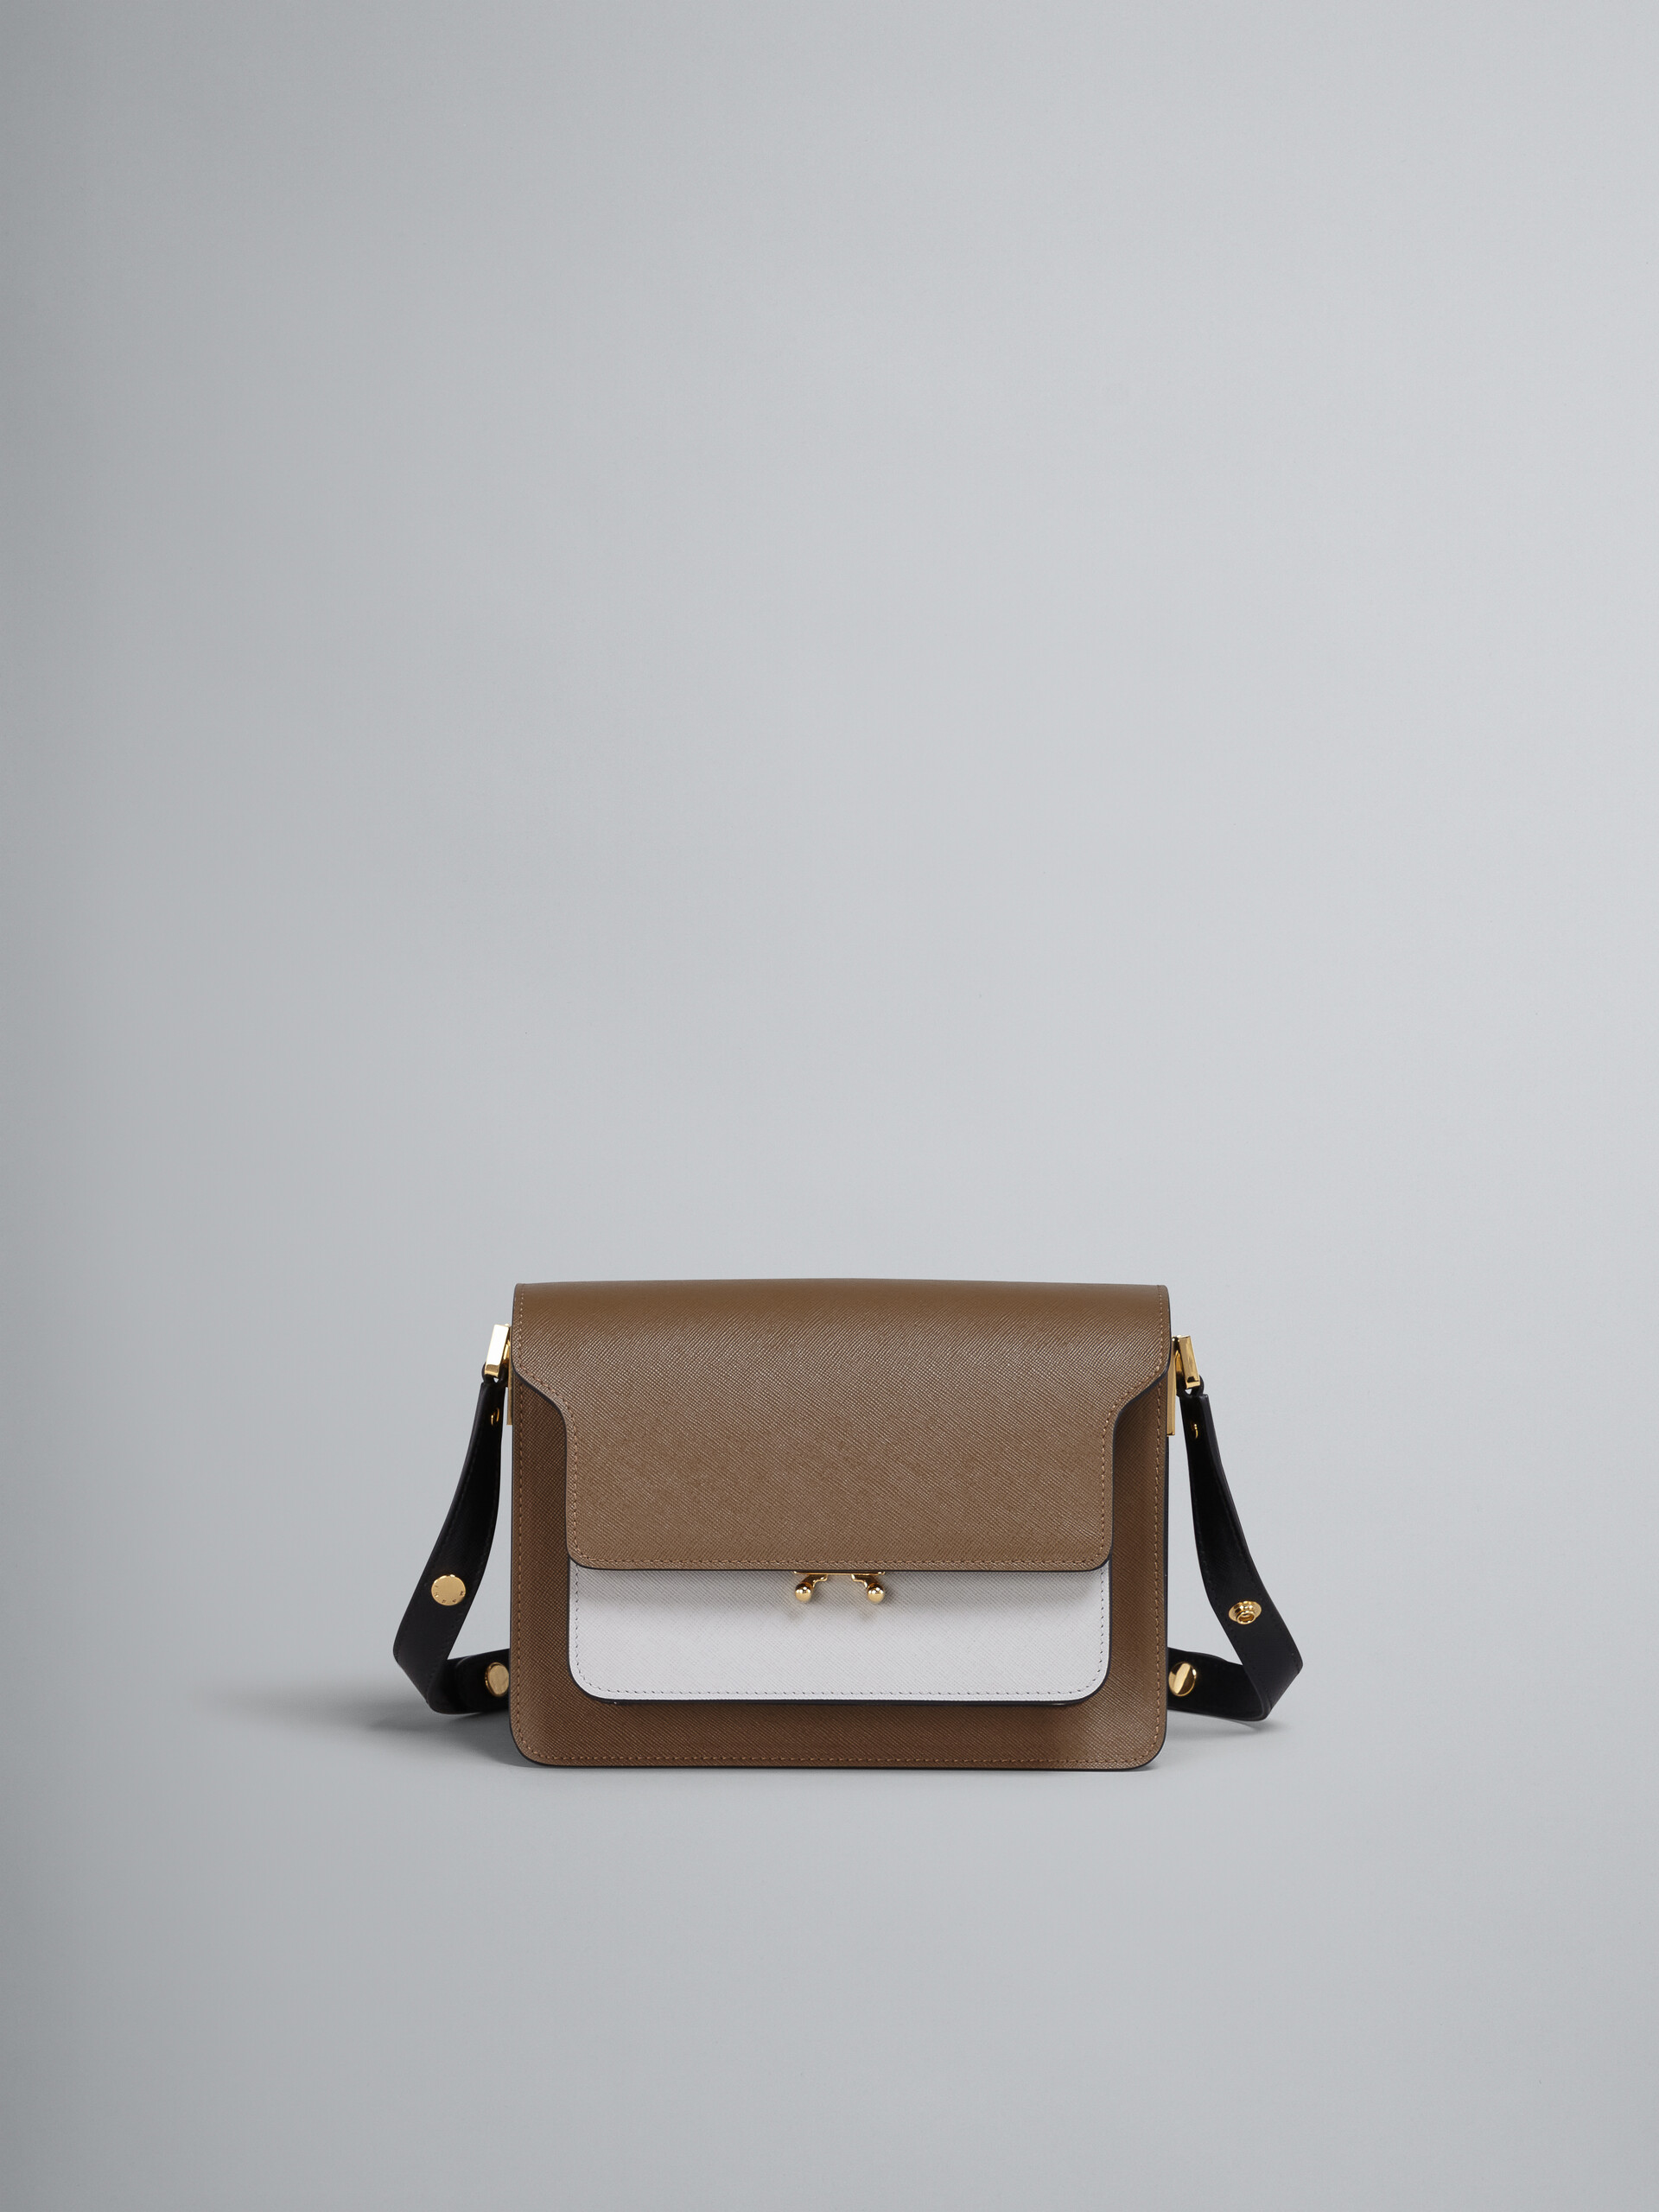 TRUNK medium bag in brown grey and black saffiano leather - Shoulder Bag - Image 1